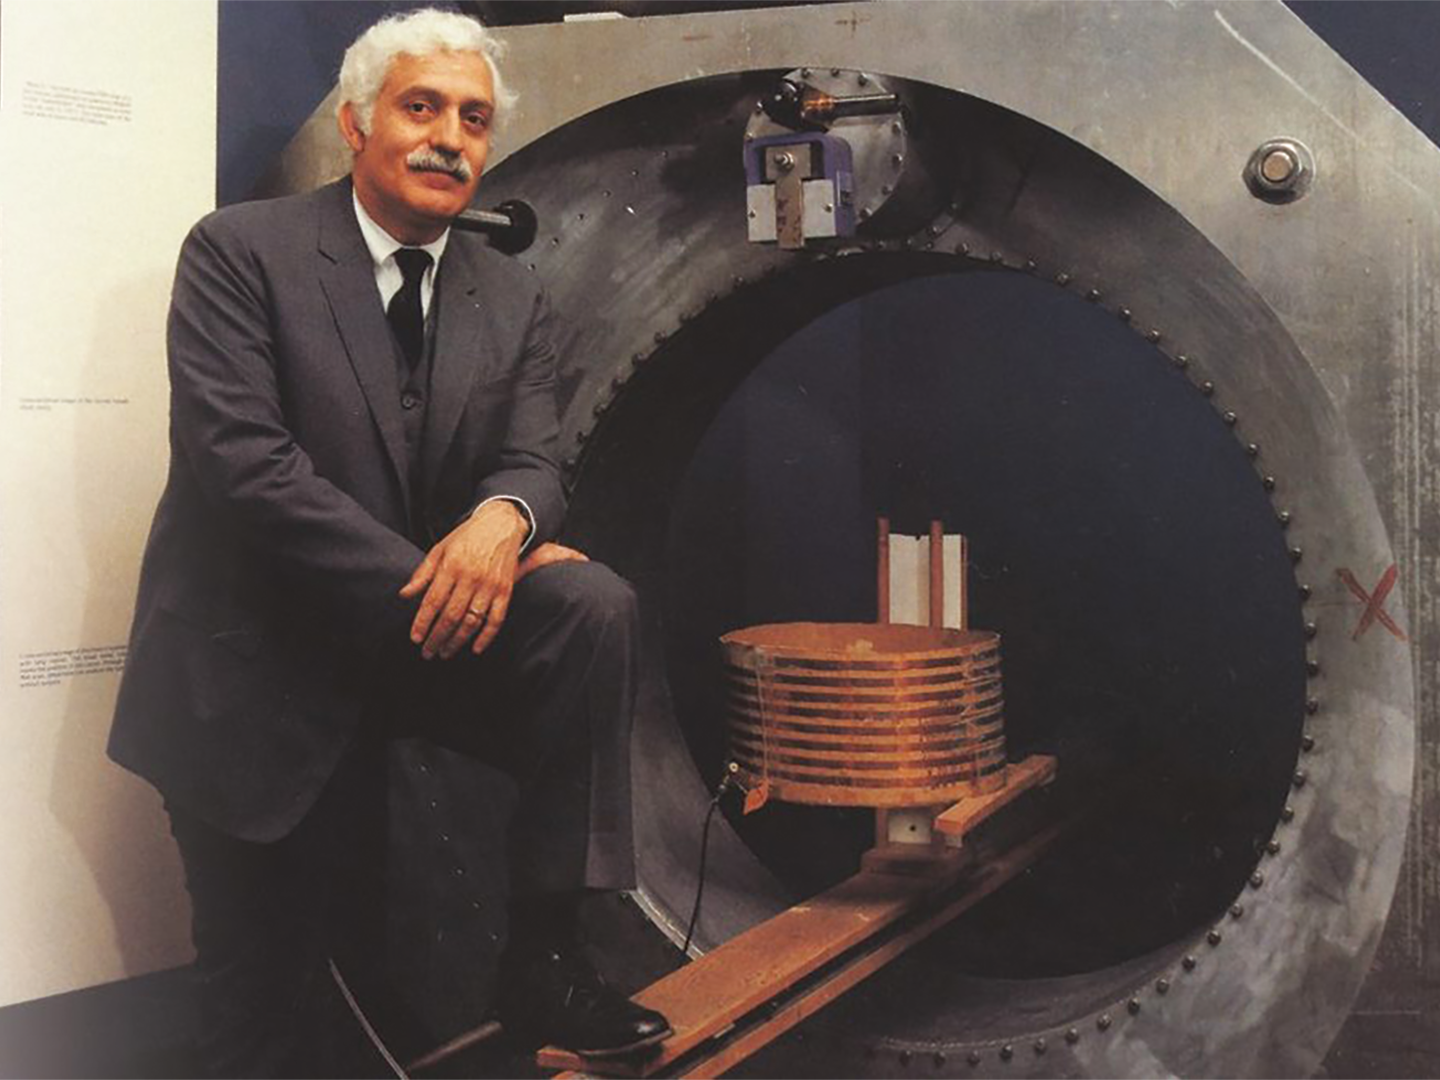 Dr. Raymond Damadian, inventor of the MRI